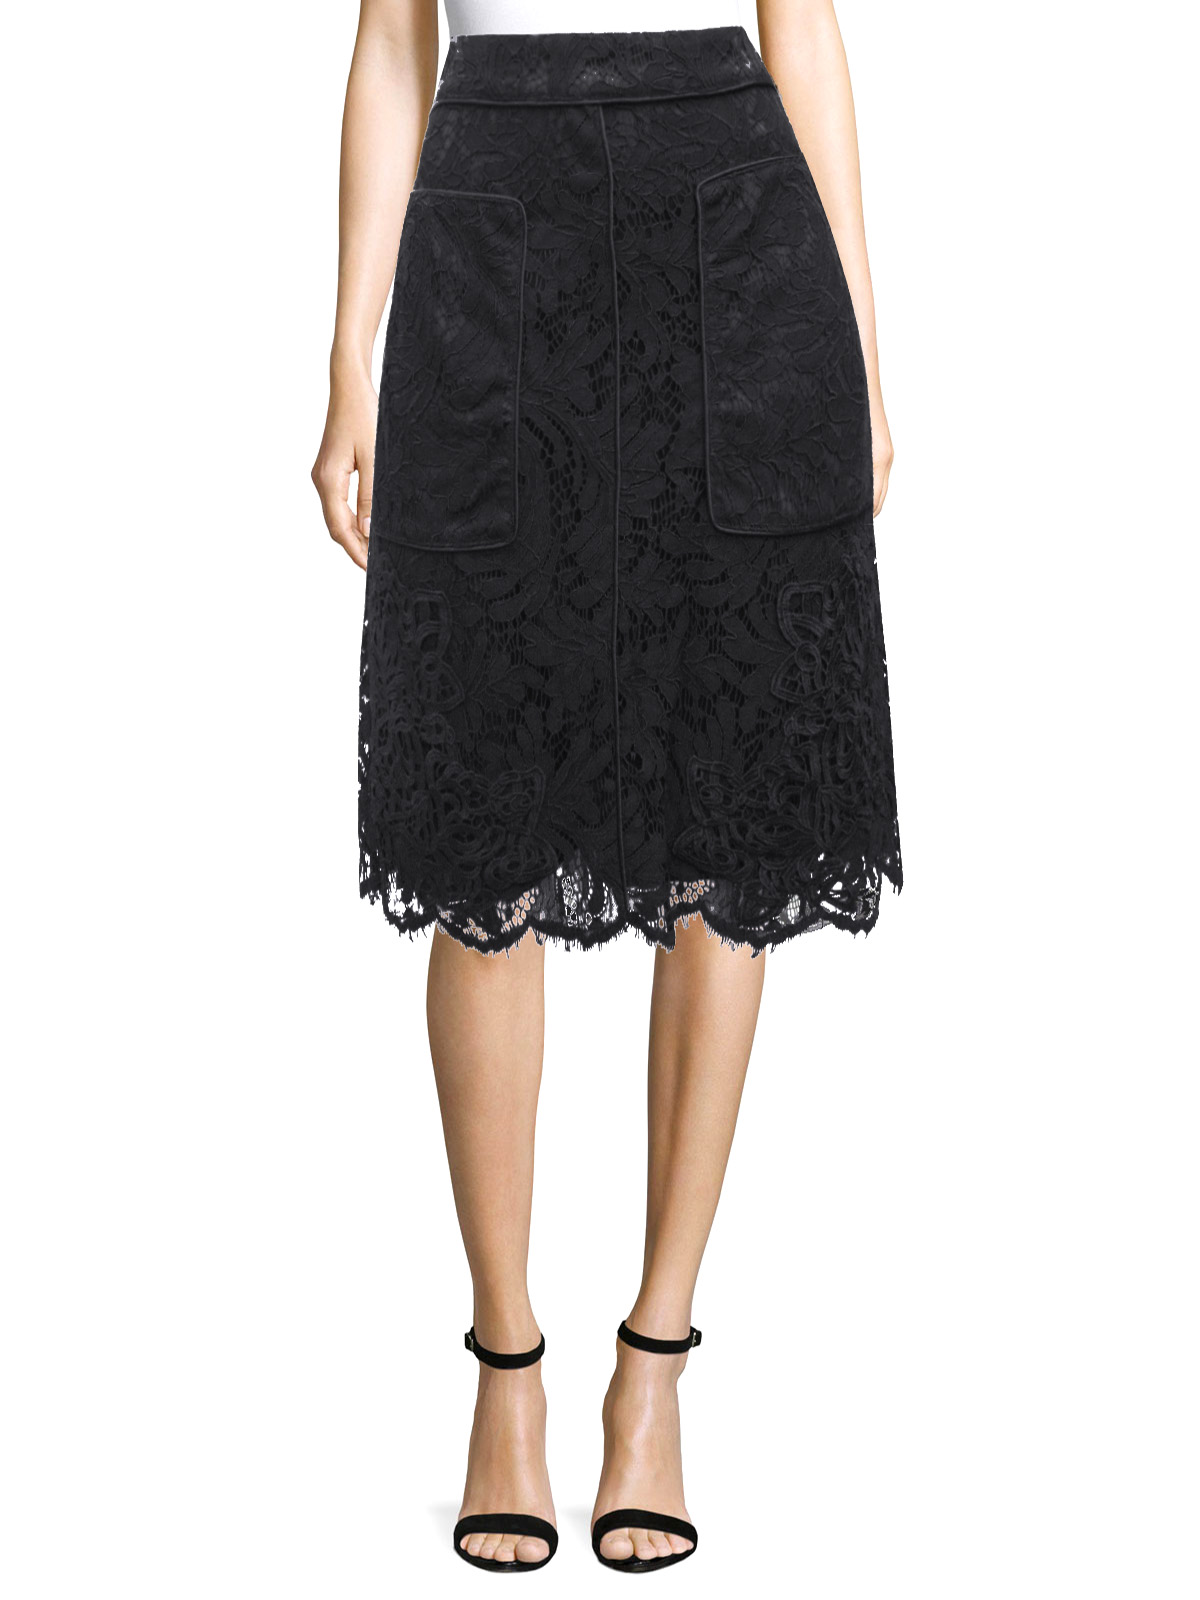 COAST - - CO4ST BLACK Crochet Lace A-Line Skirt - Size 6 to 18